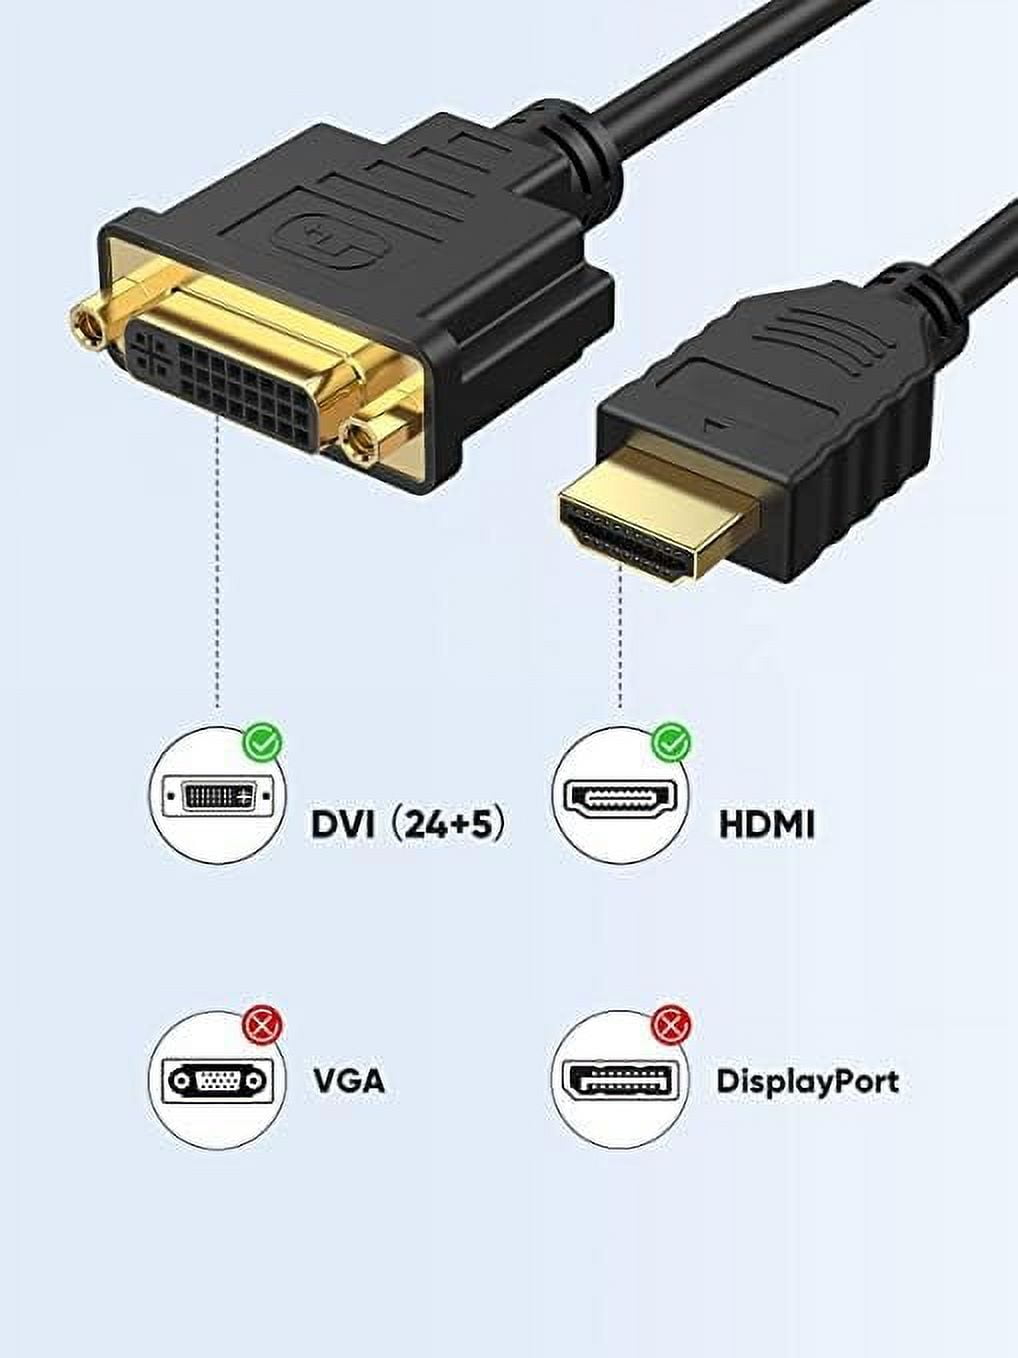 Black-i Bi-hddvi500 Dvi-d (24+1) To Hdmi Cable 4k 30hz 5 Meter